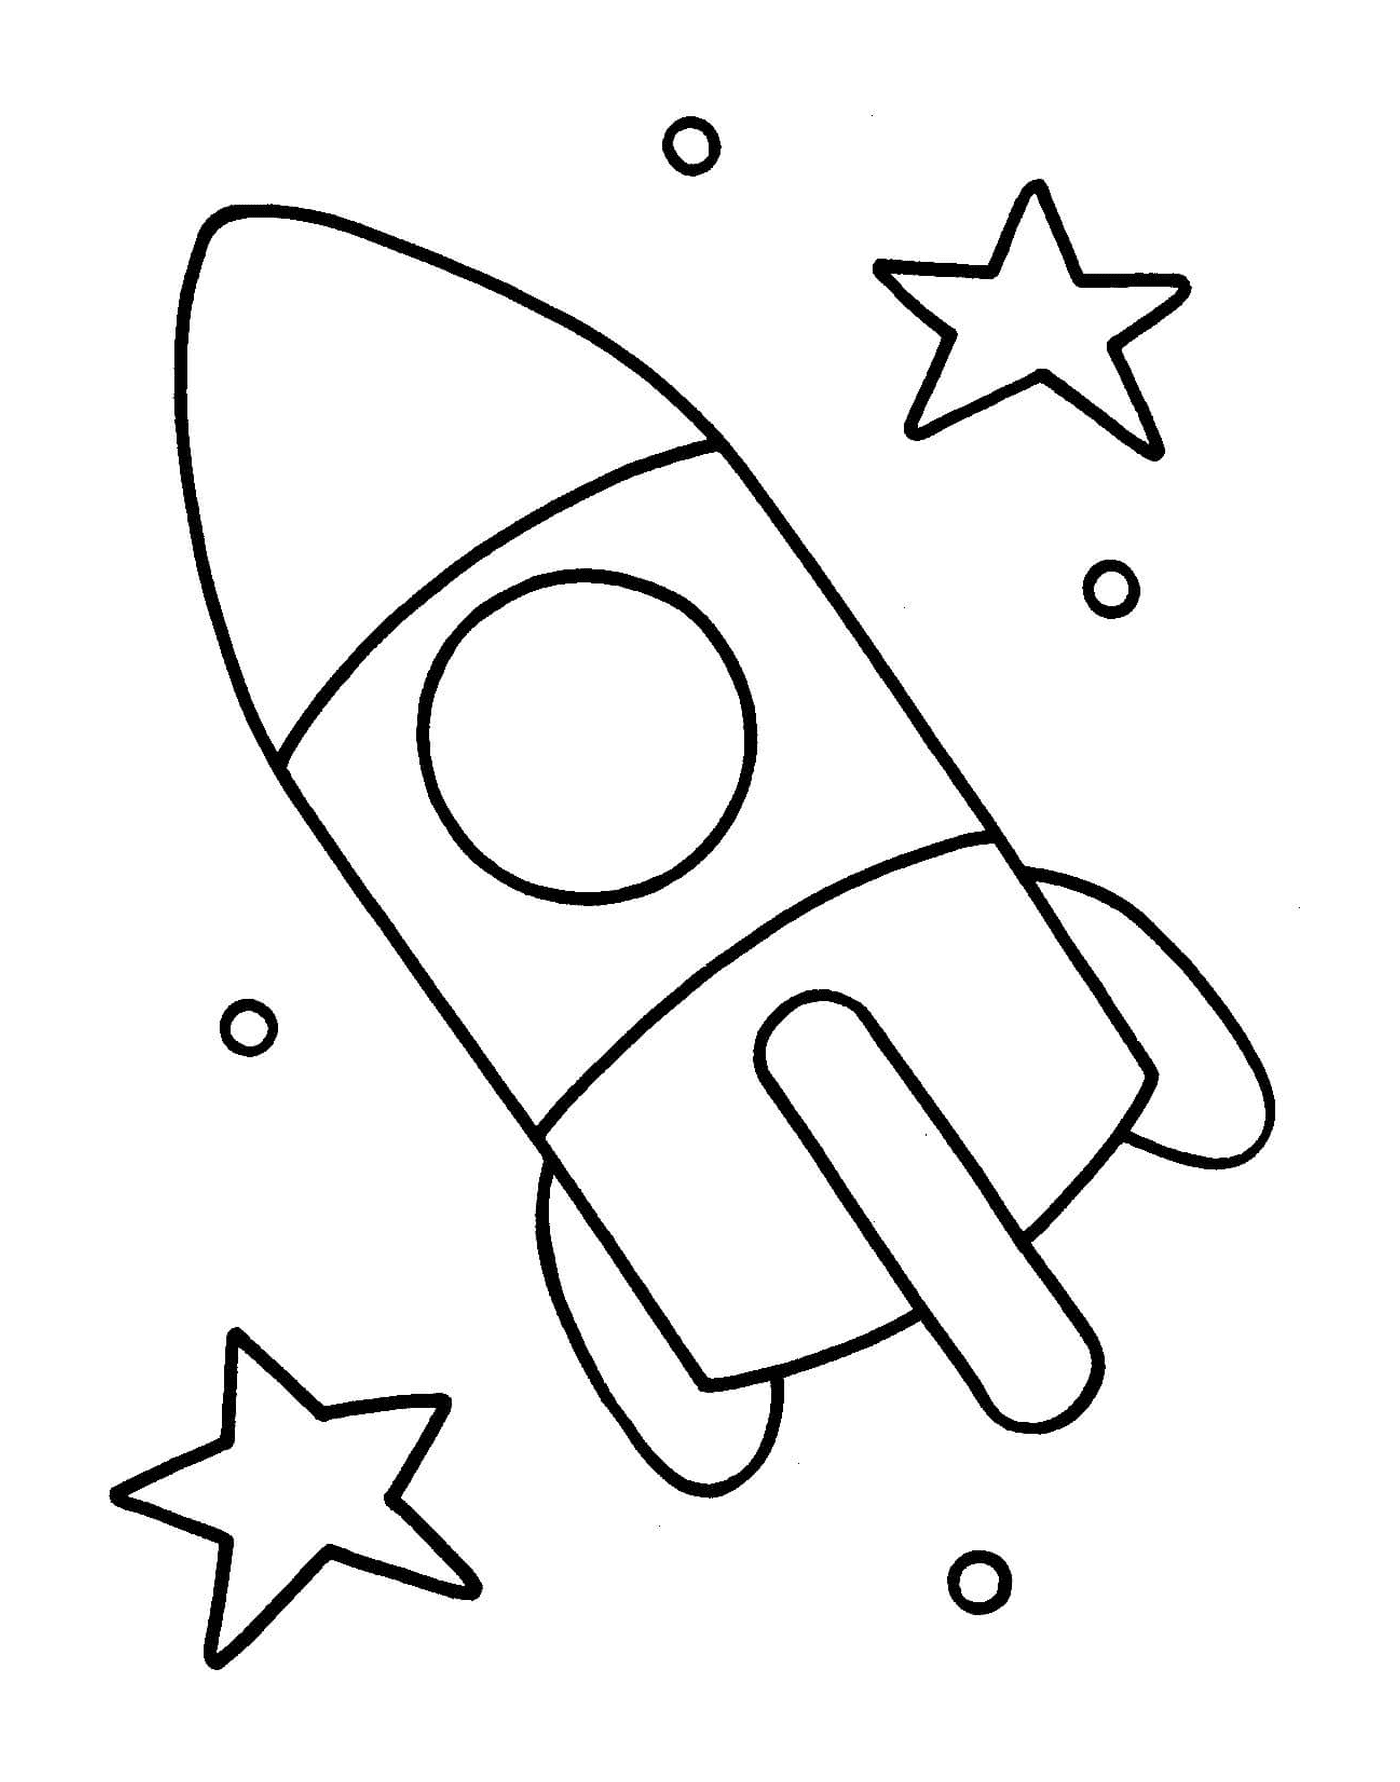  Cohete espacial para niños 